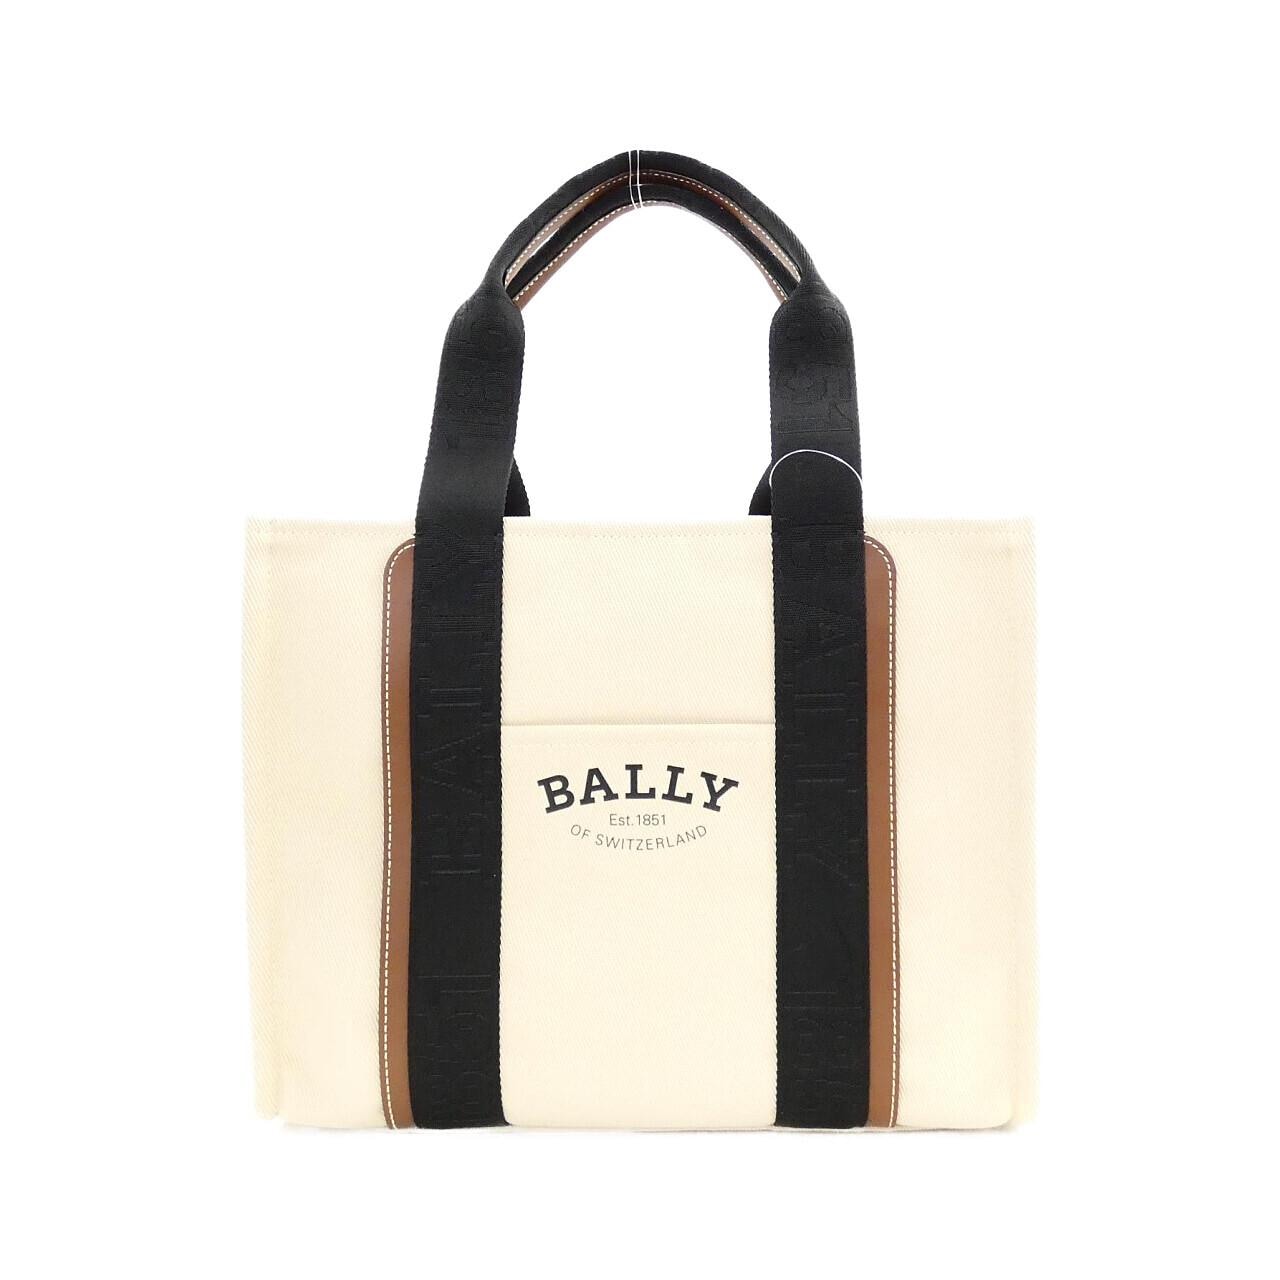 [BRAND NEW] Barry DRYVALIA XL Bag